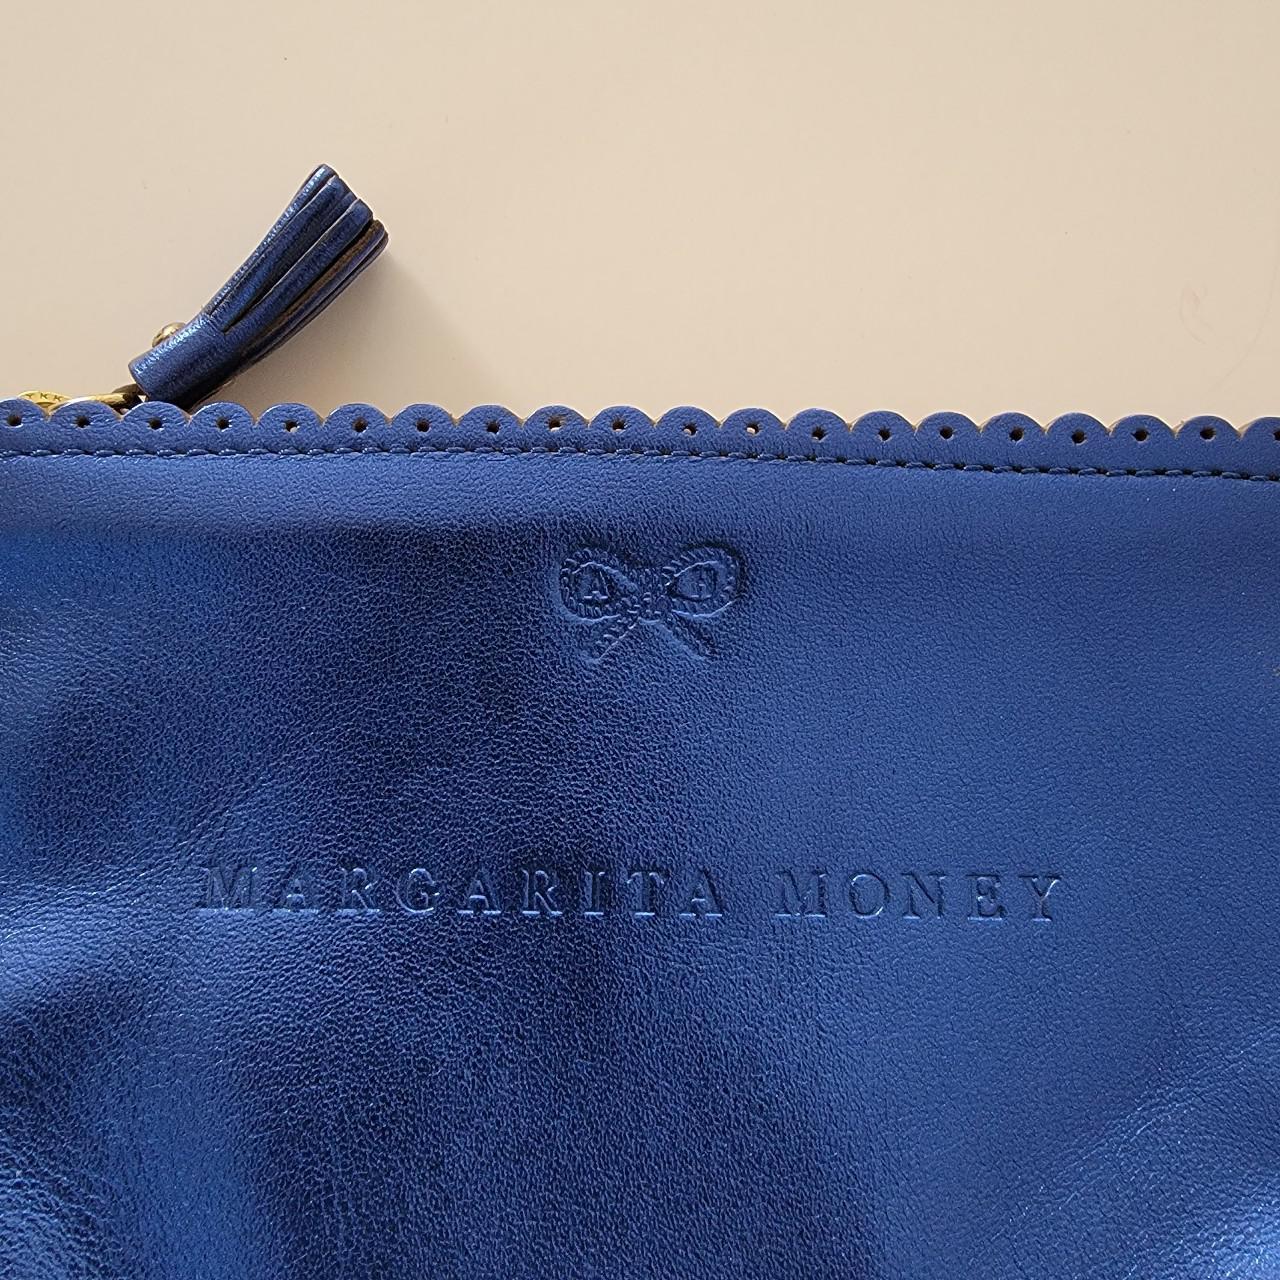 Anya Hindmarch Women's Blue Bag (2)